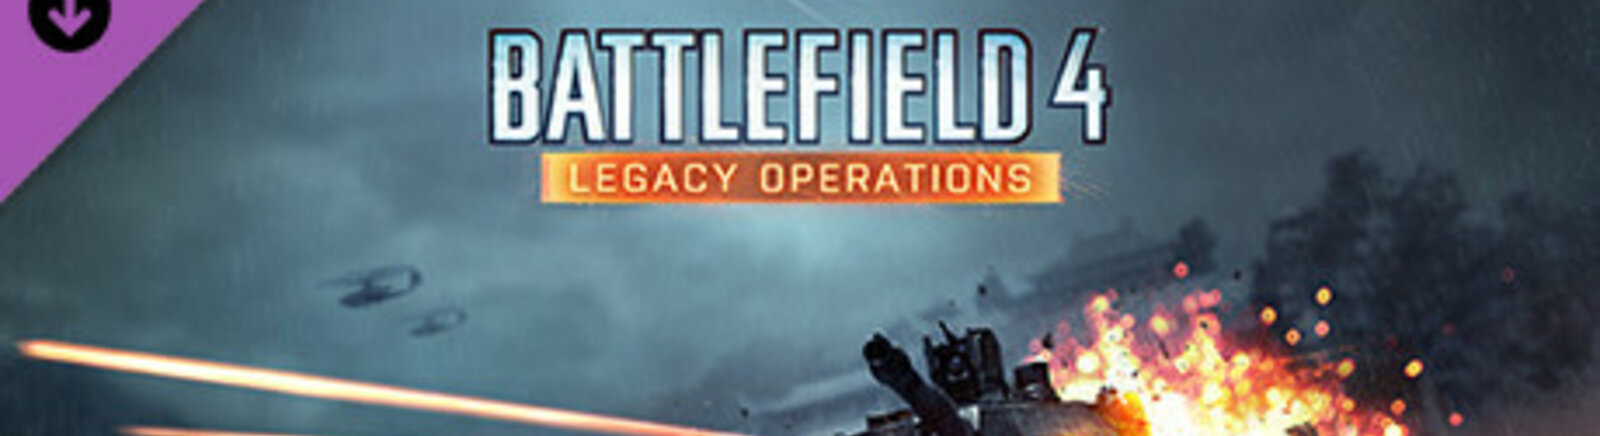 Дата выхода Battlefield 4: Legacy Operations  на PC, PS4 и Xbox One в России и во всем мире